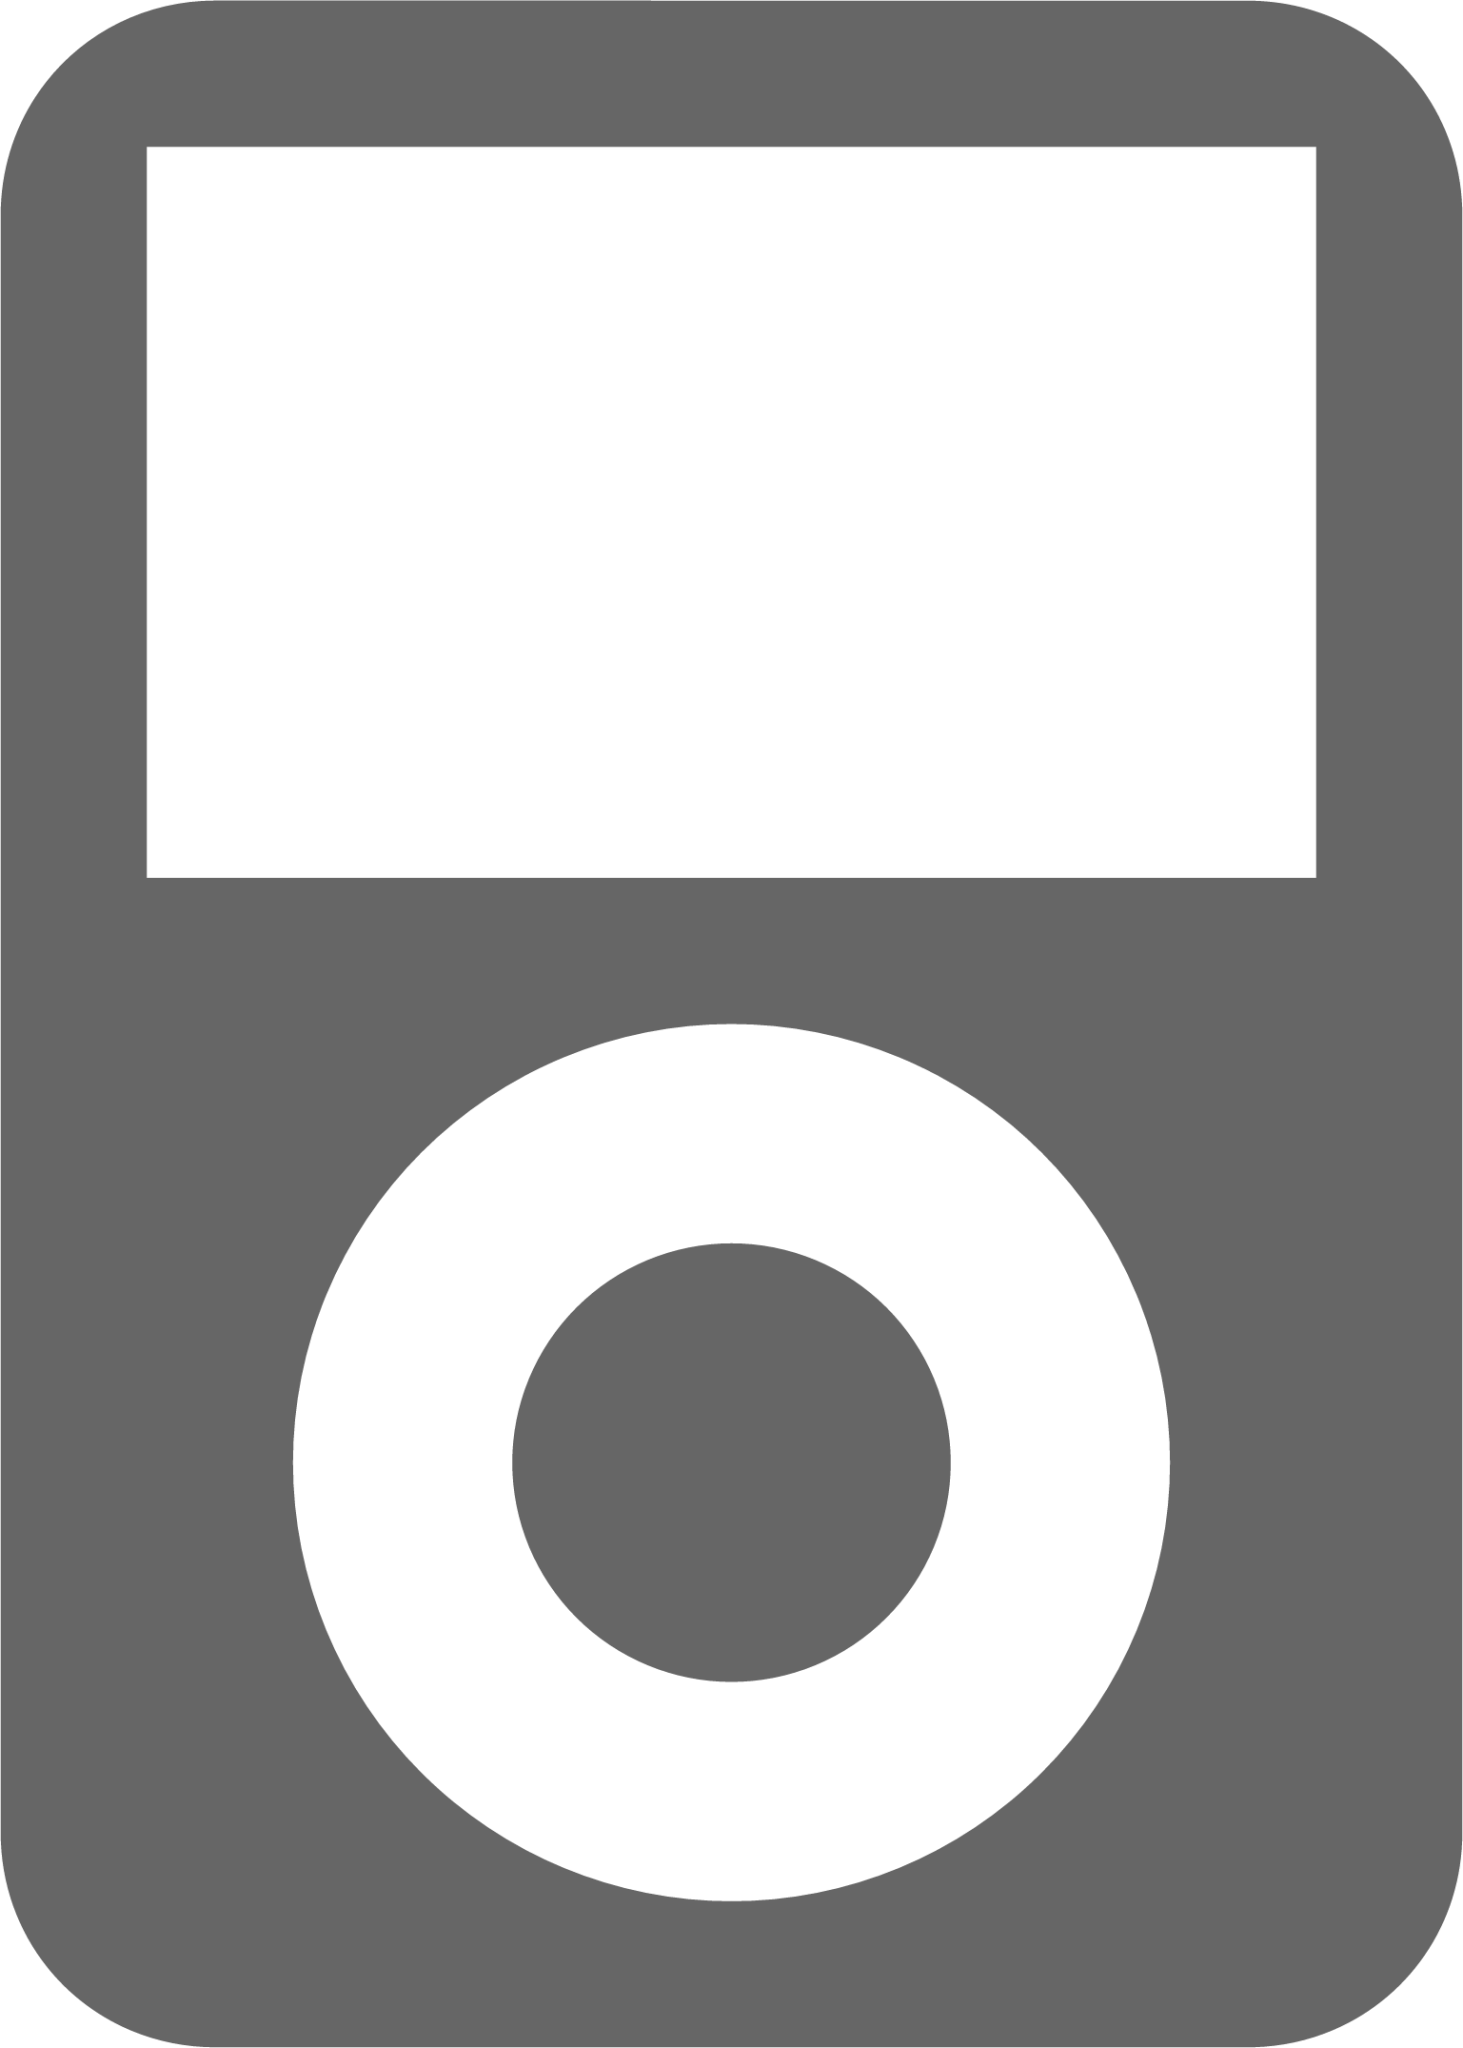 multimedia player symbolic icon